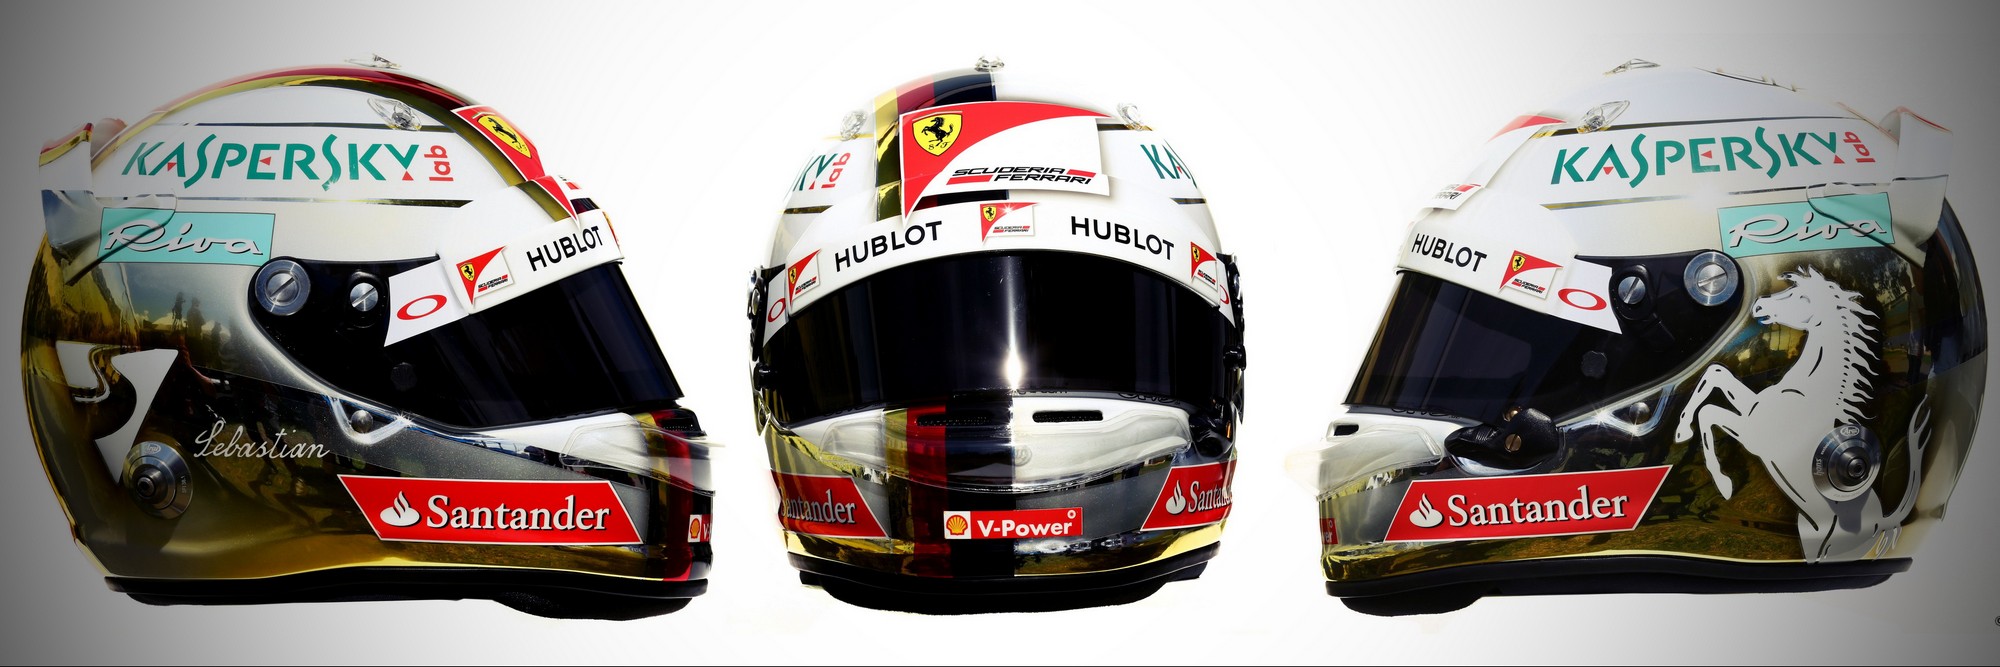 Шлем Себастьяна Феттеля на сезон 2016 года | 2016 helmet of Sebastian Vettel